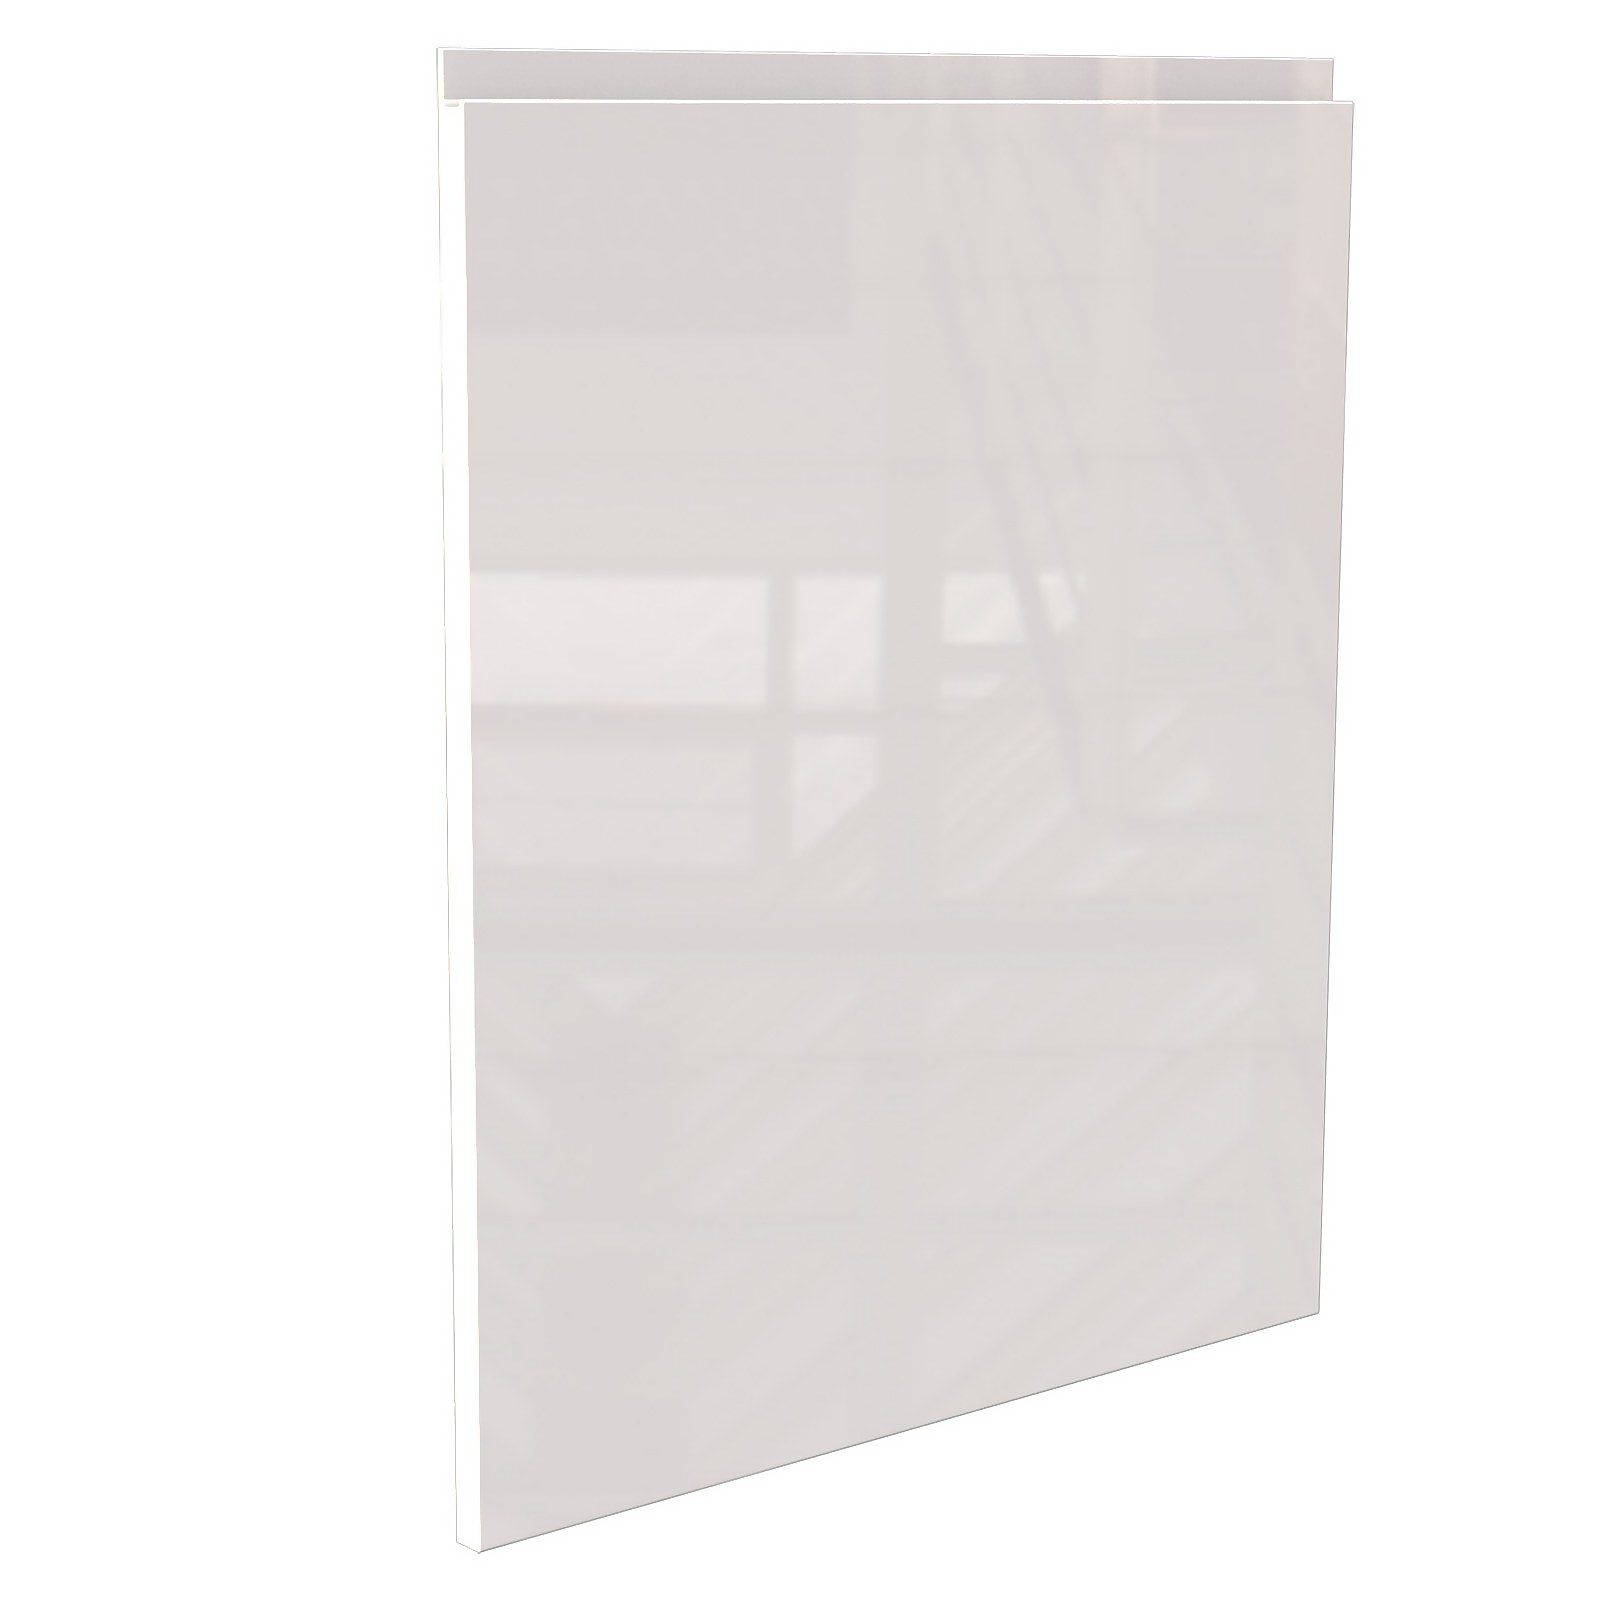 Handleless Kitchen Cabinet Door (W)597mm - Gloss White